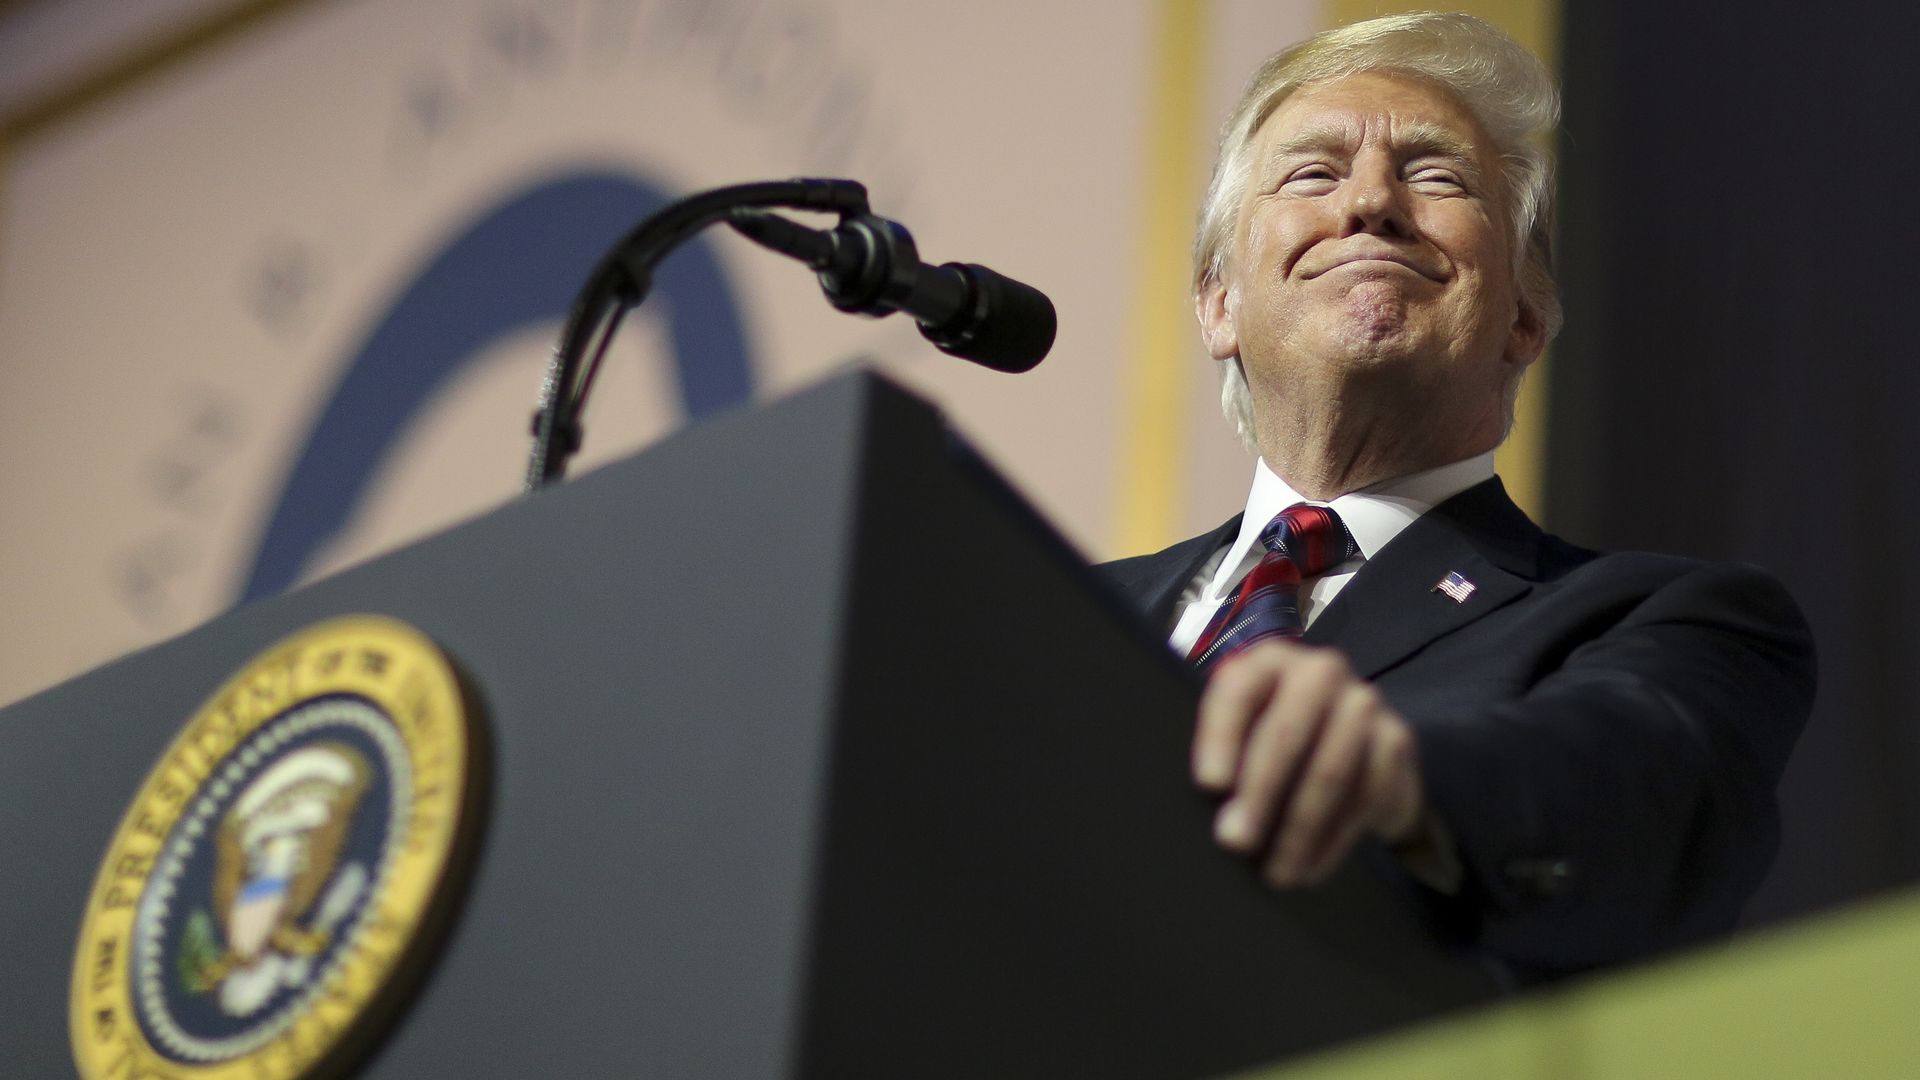 President Trump smiling at the podium.